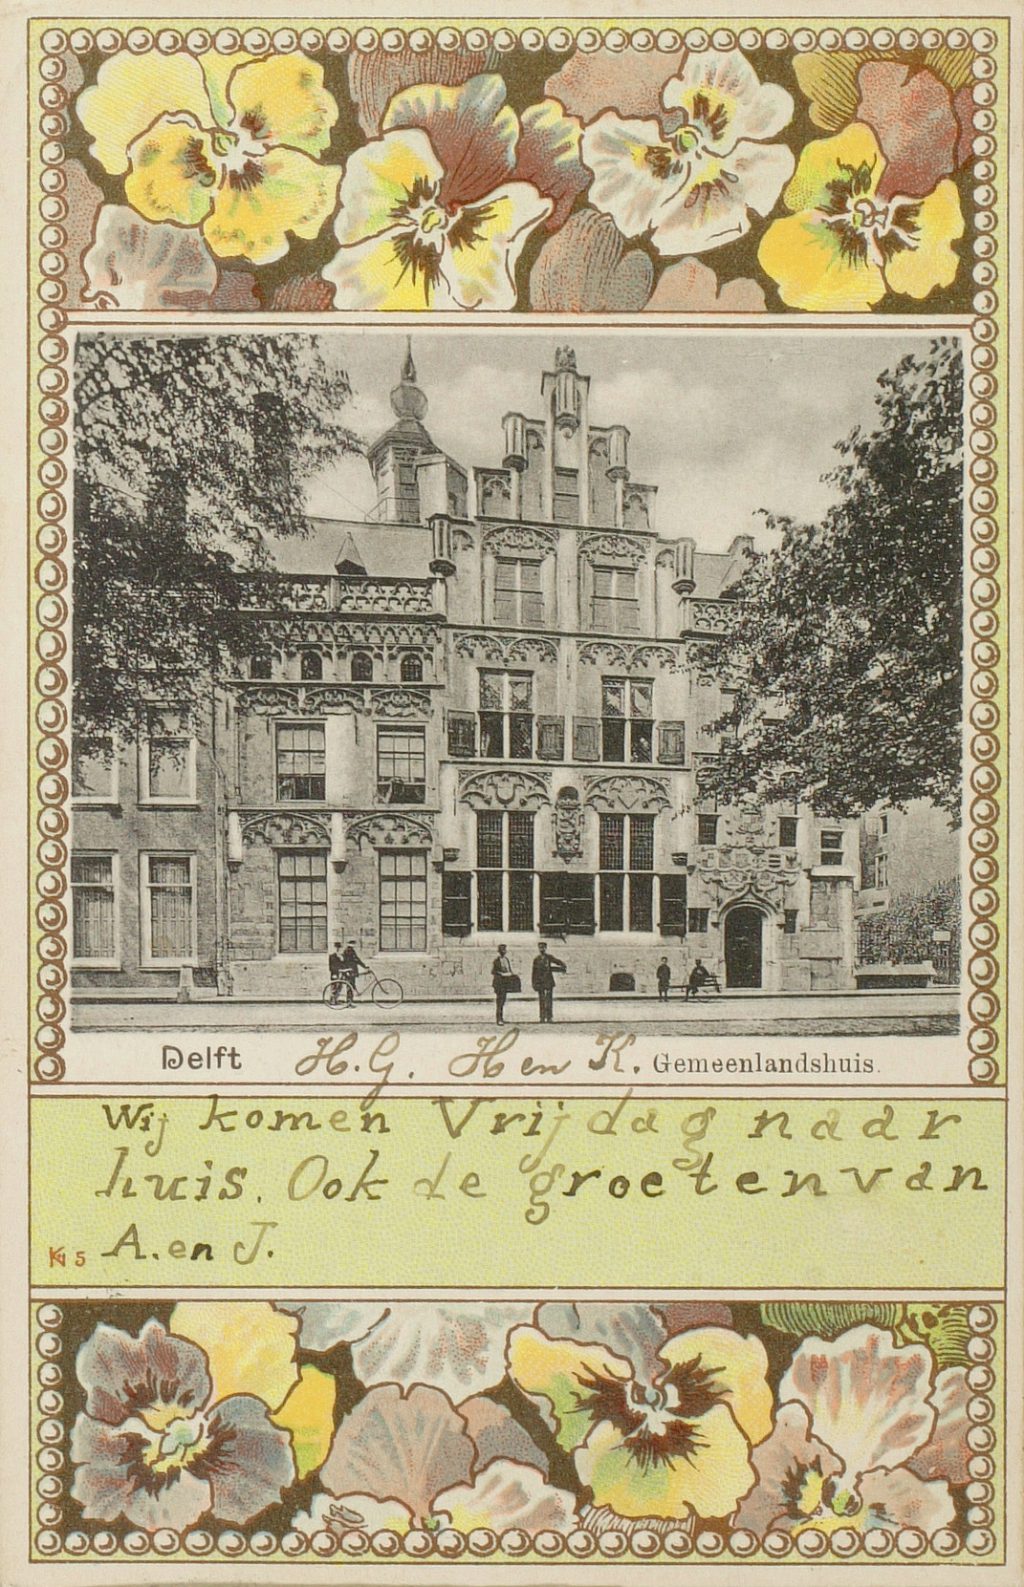 A.W. Segboer, Ansichtkaart van het Gemeenlandshuis, ca. 1900 (TMS 52763)